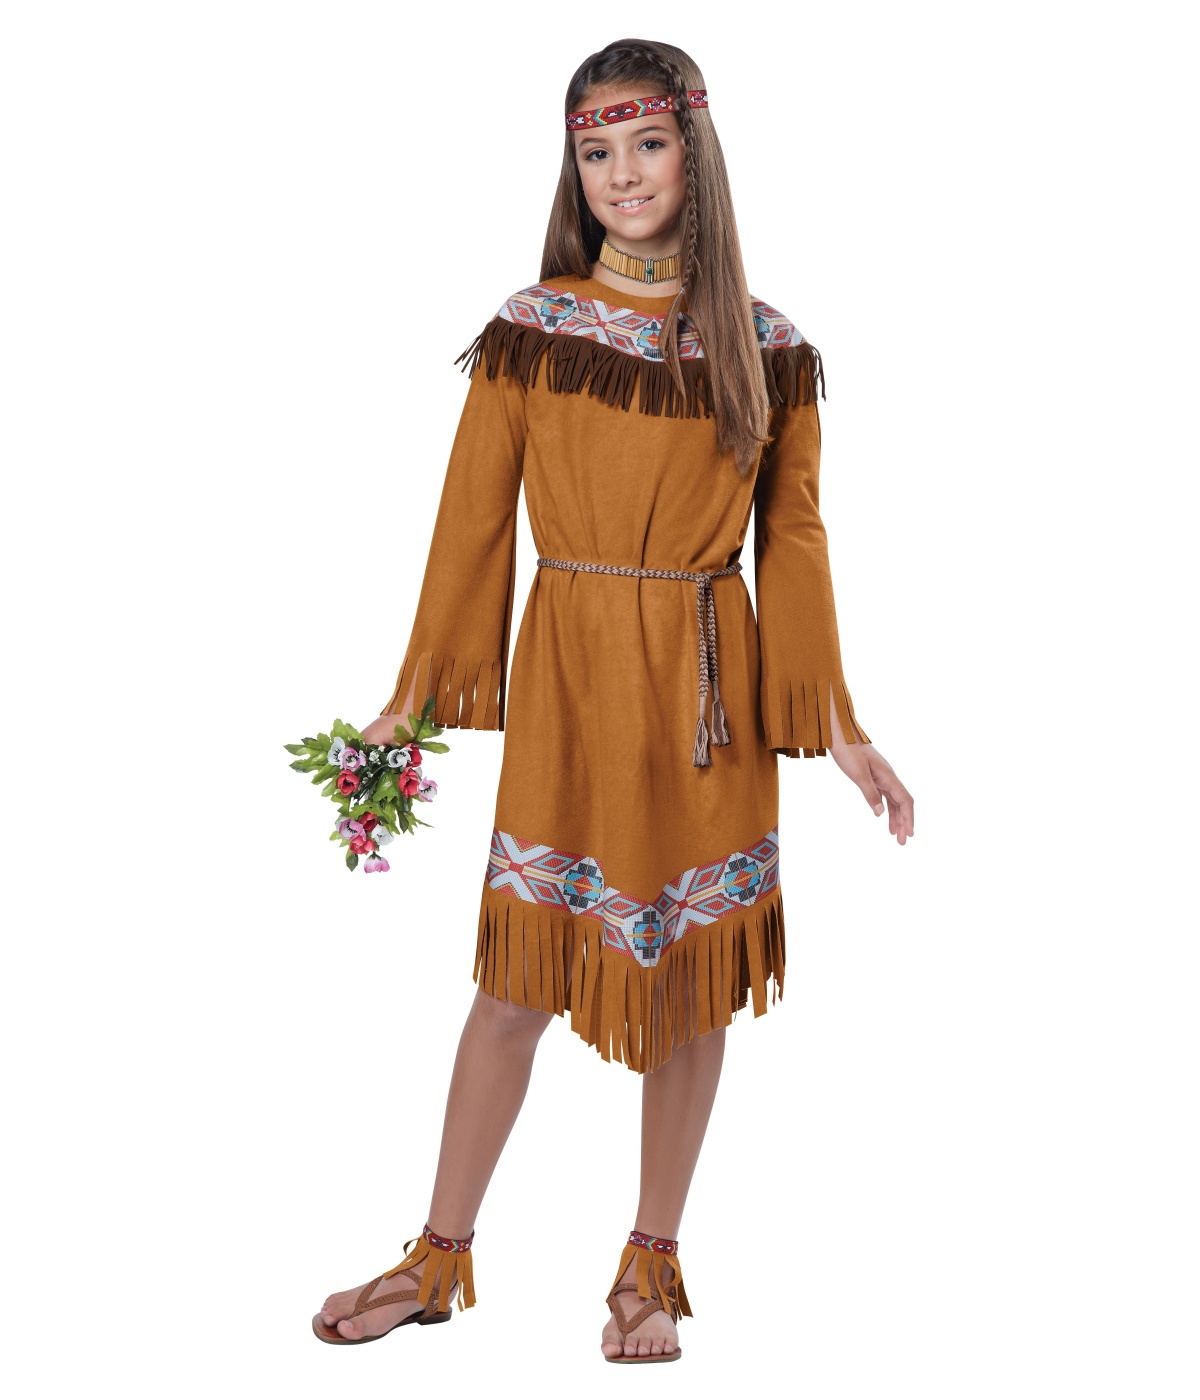  Girls Native American Indian Costume